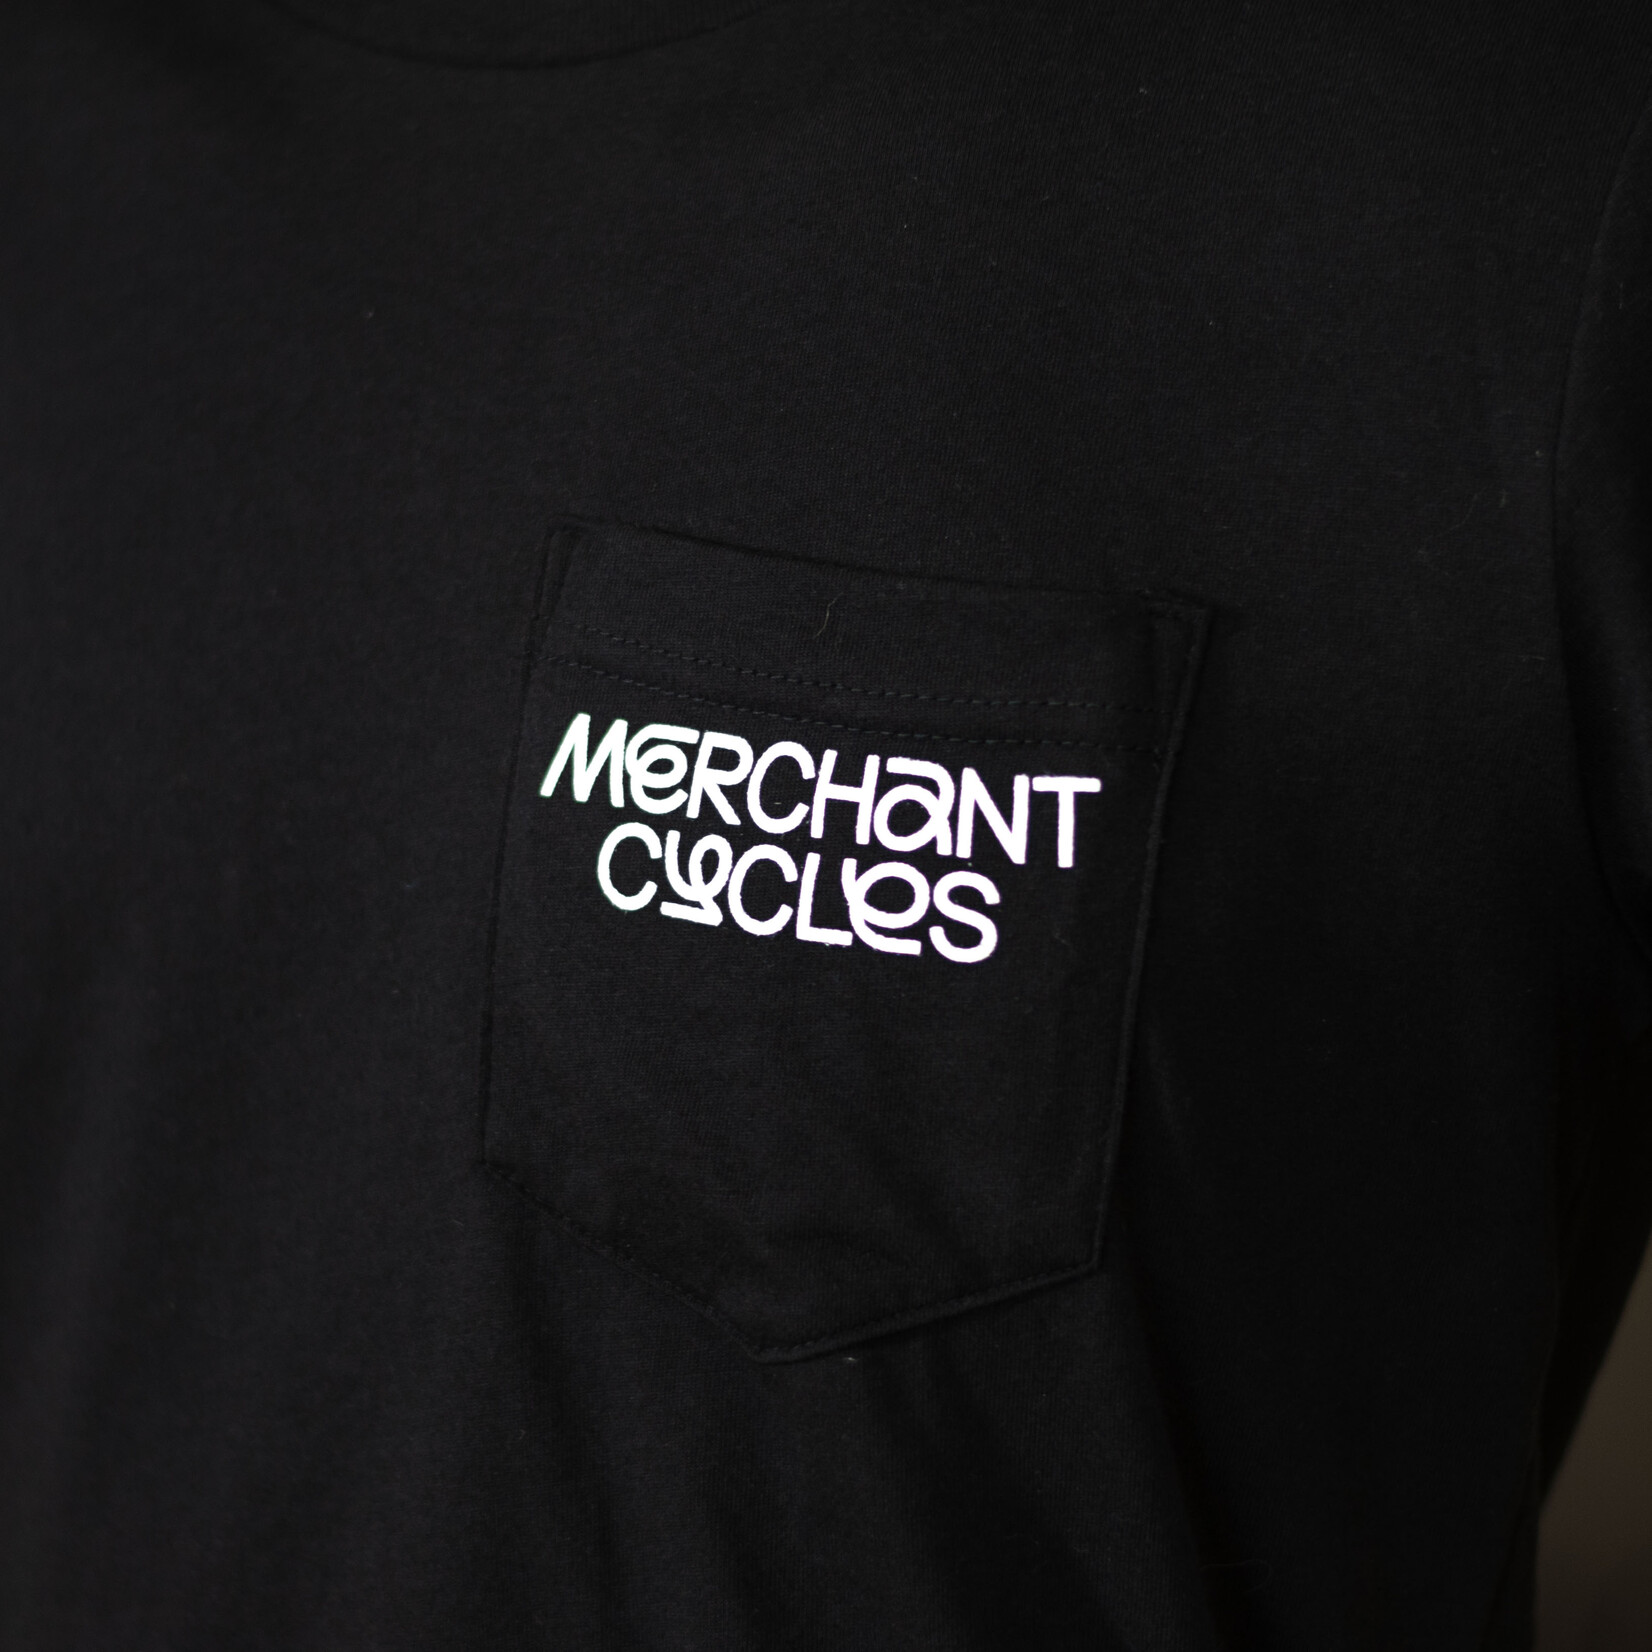 Merchant Cycles Shirt Black Pocket Tee